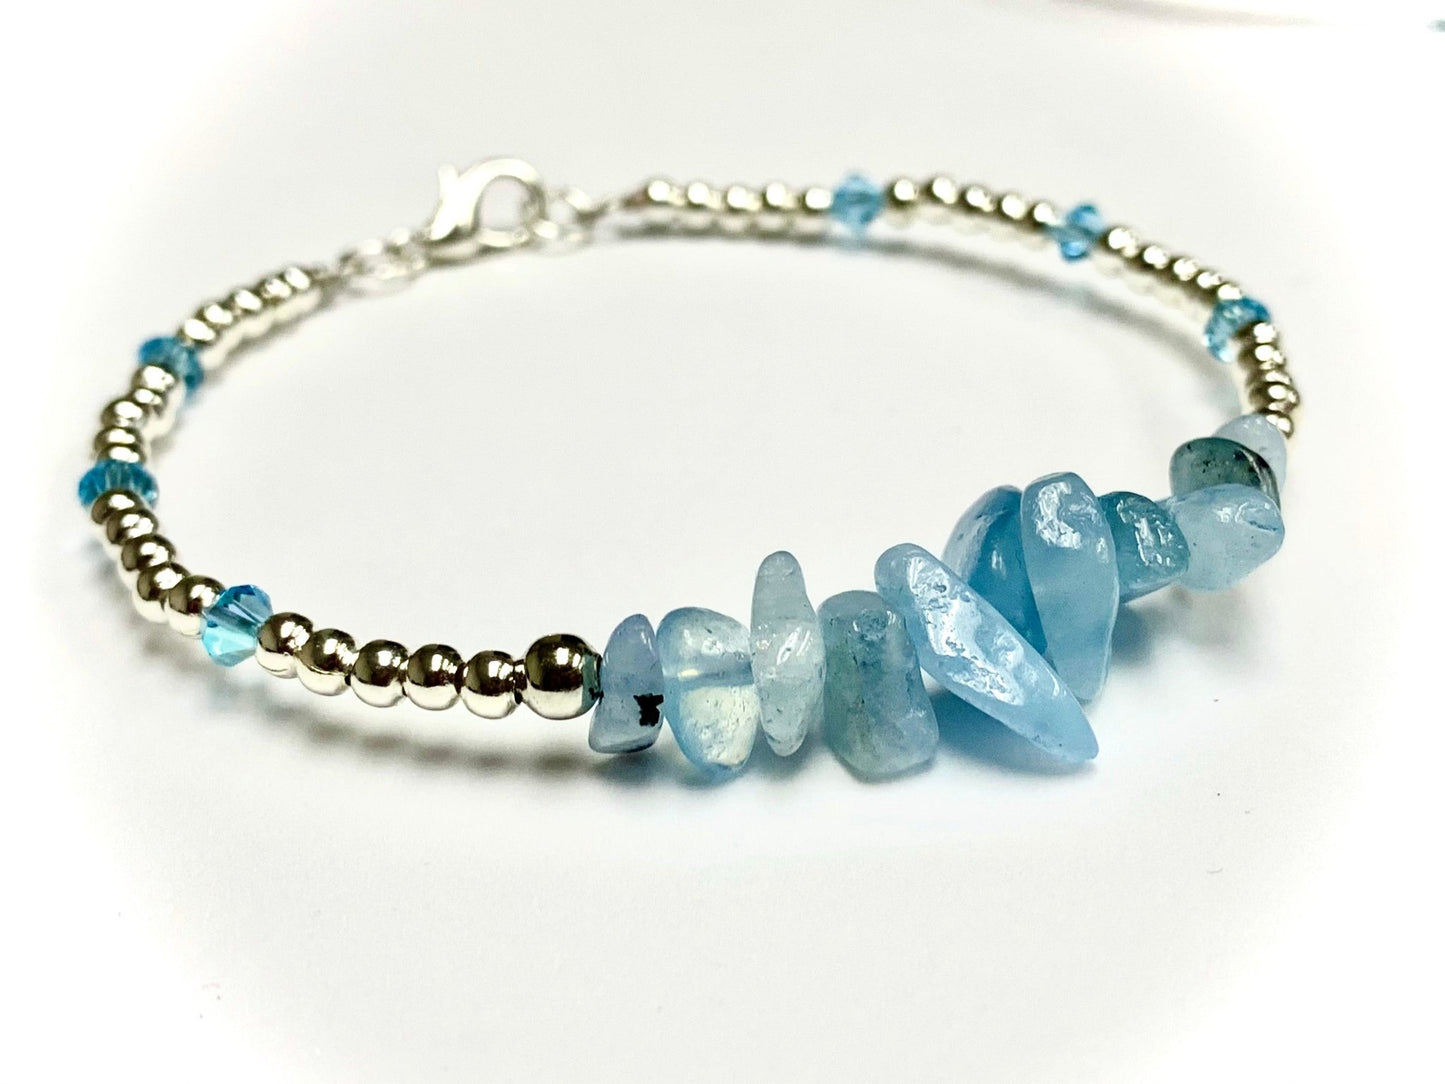 🔴SOLD🔴 Josephina- Handmade Authentic Aquamarine and Swarovski Crystal Bracelet - Born Mystics